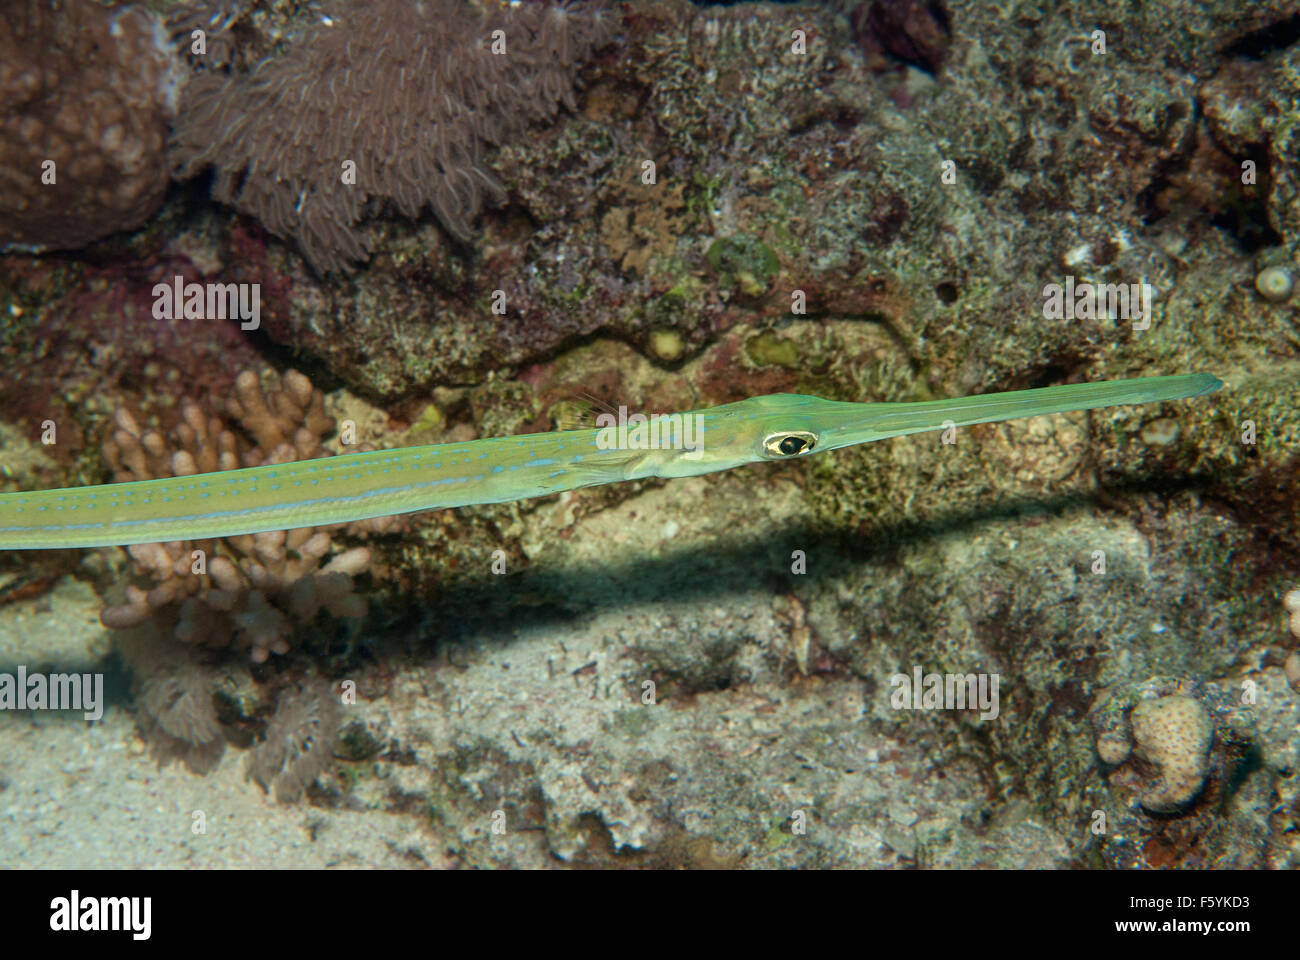 trug Helligdom Formindske Red cornetfish hi-res stock photography and images - Alamy